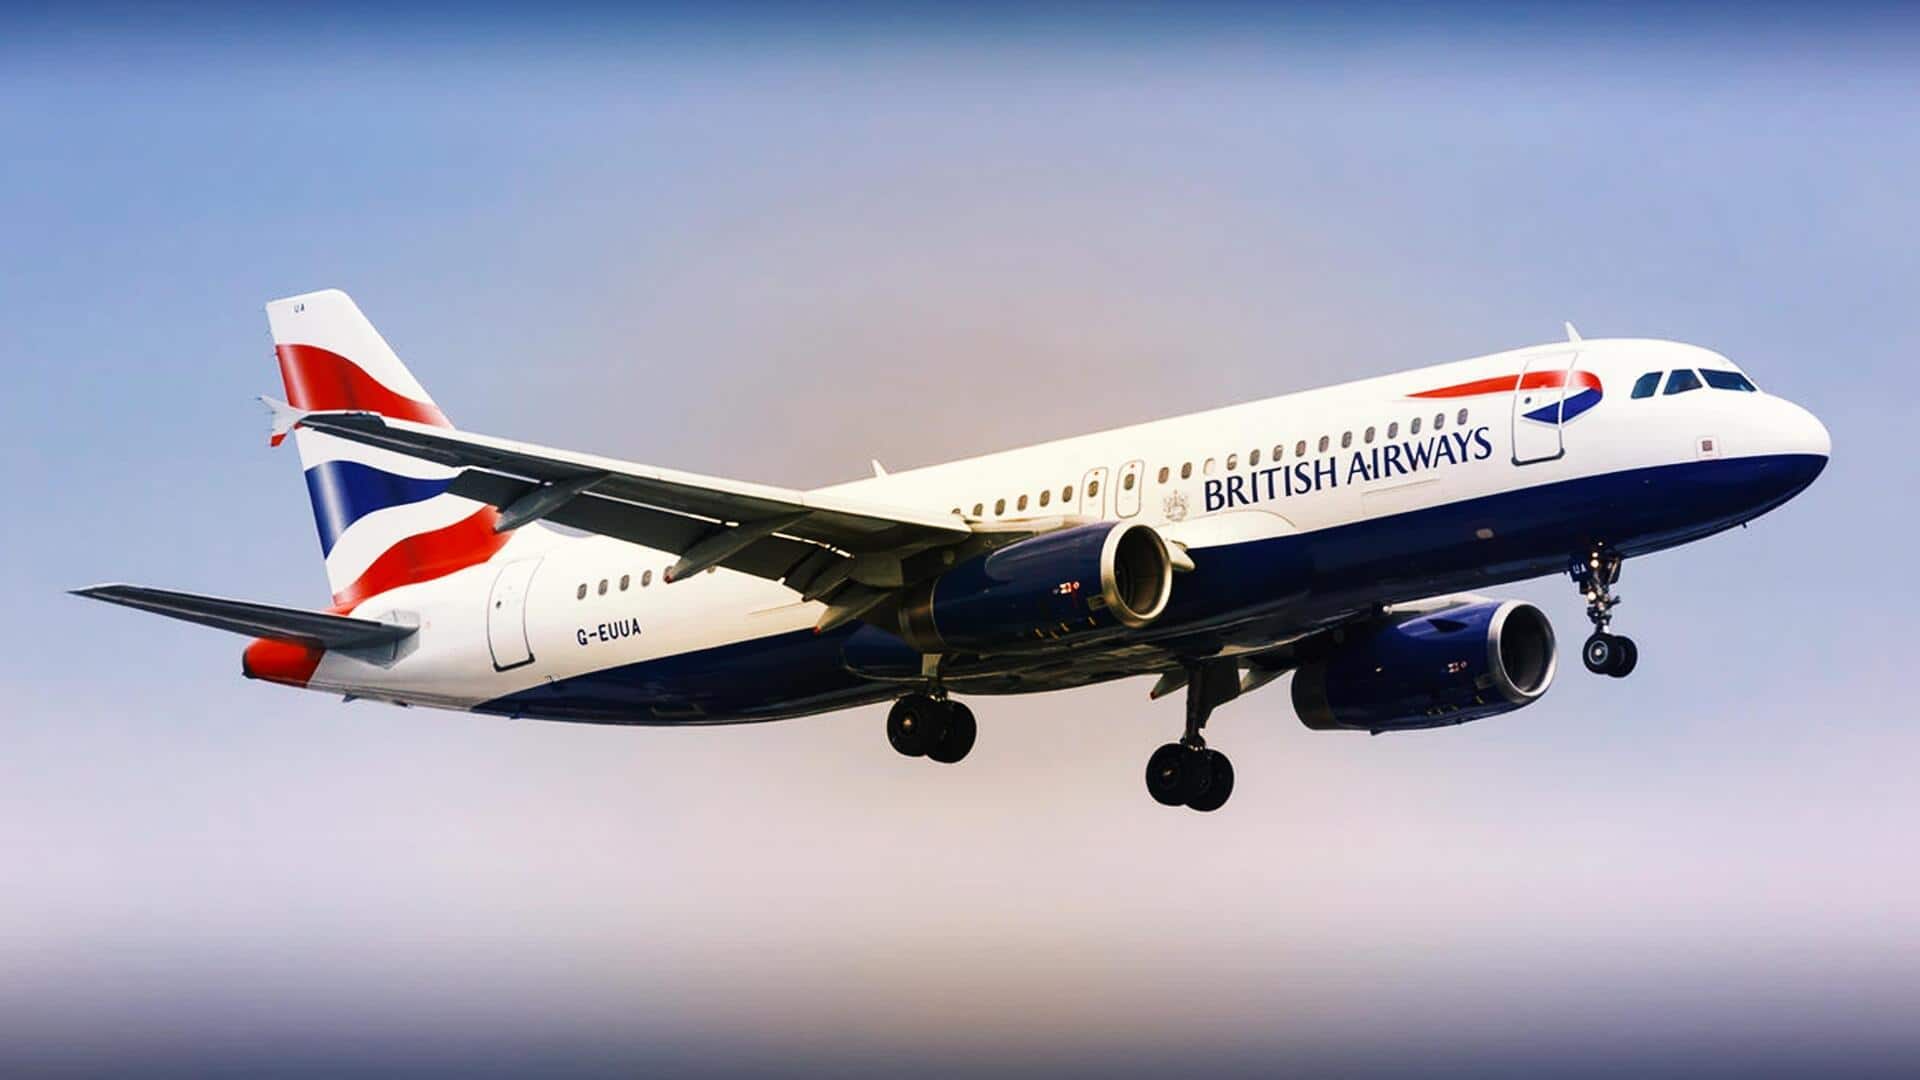 Fumes in cockpit: British Airways flight makes emergency landing